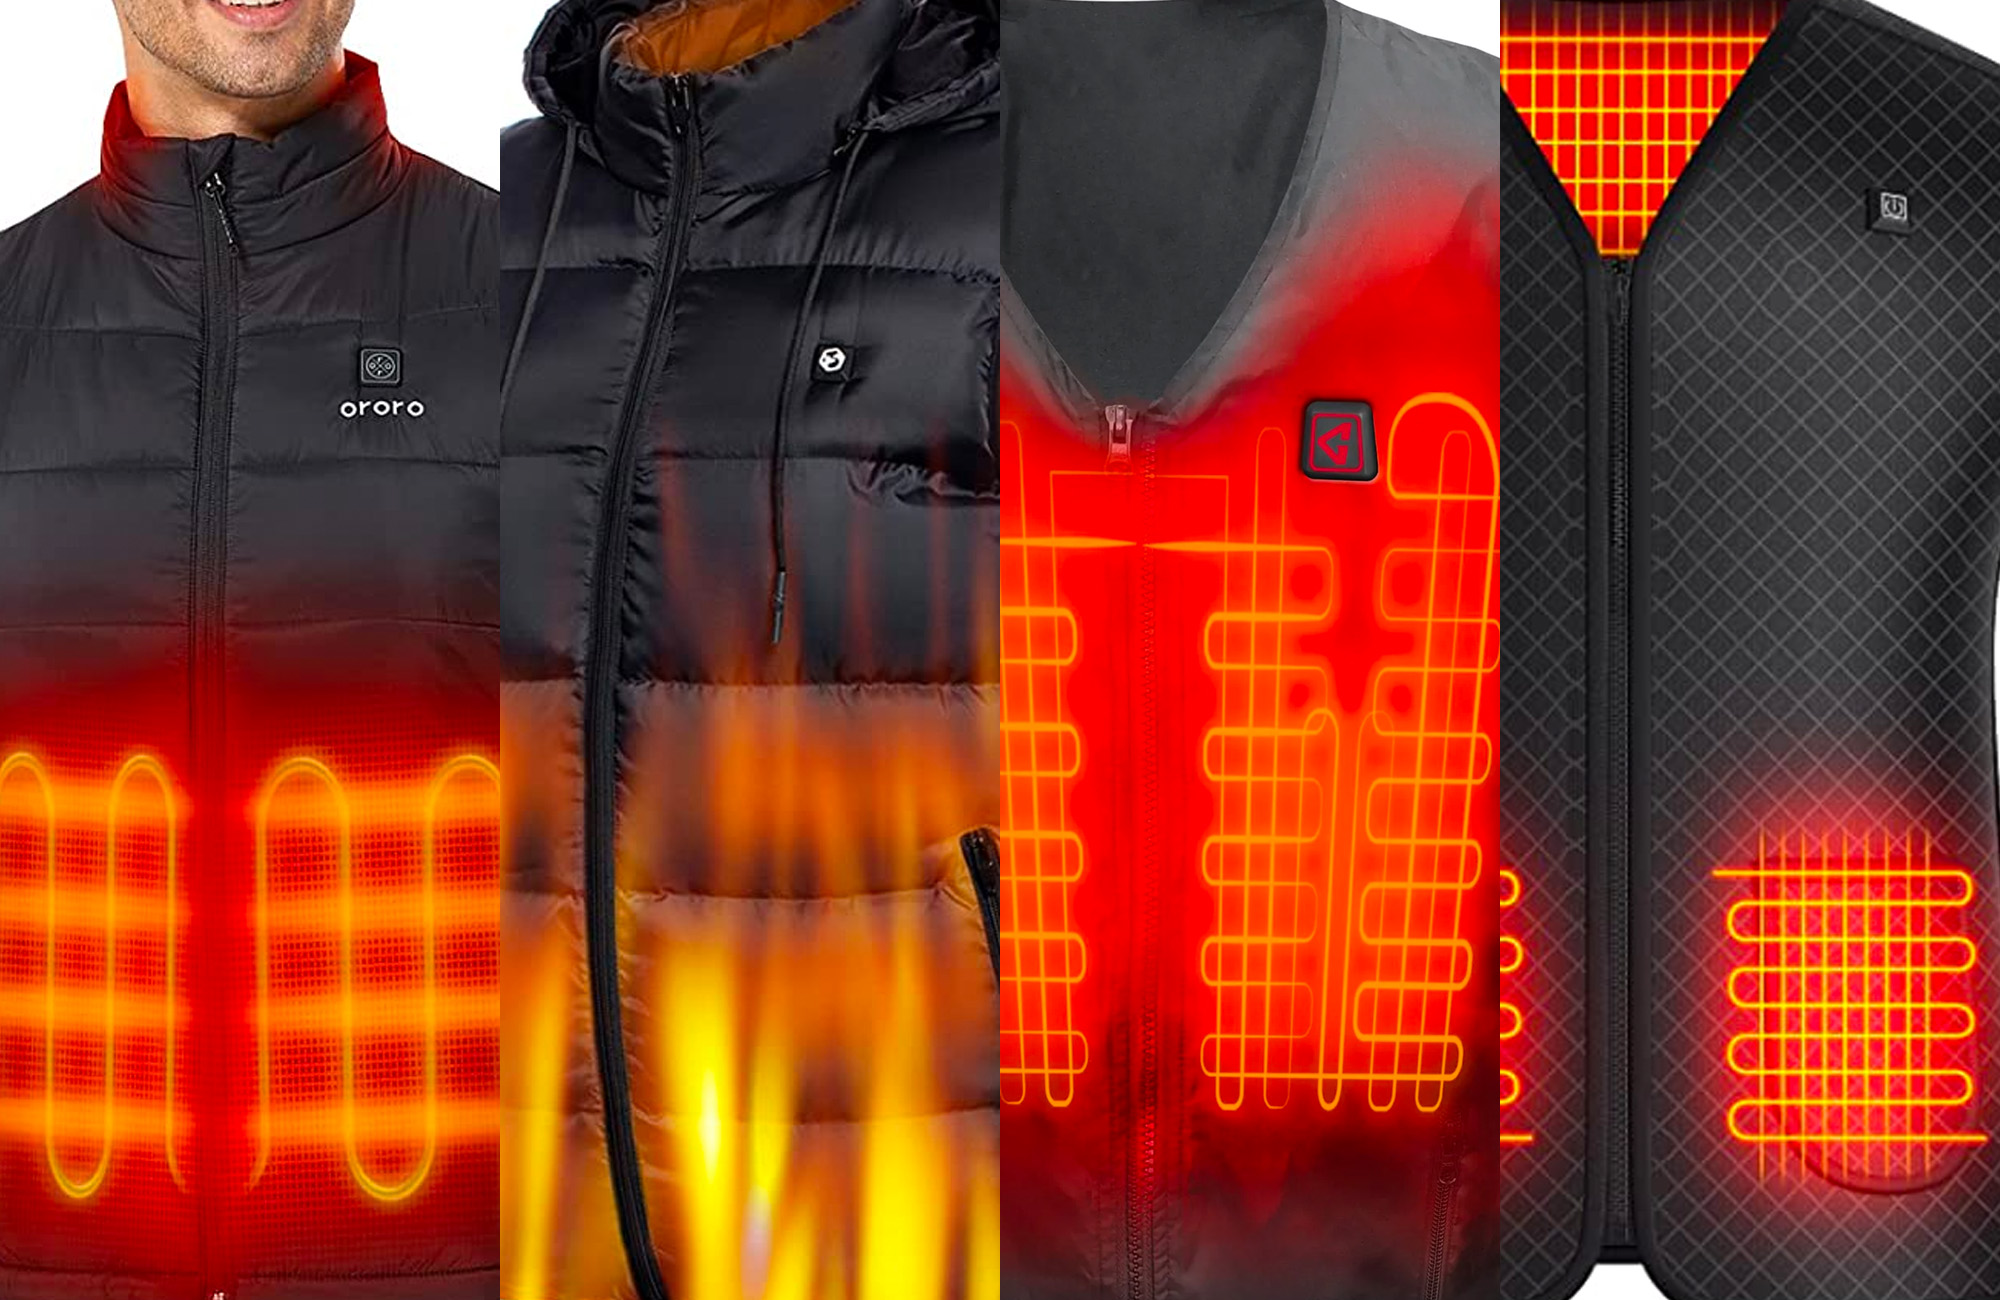 Heated Vests,Heated Body Warmer,Unisex Heated Gilet, 3 Temperature Levels  Electric Heating Jacket,Heated Waistcoat